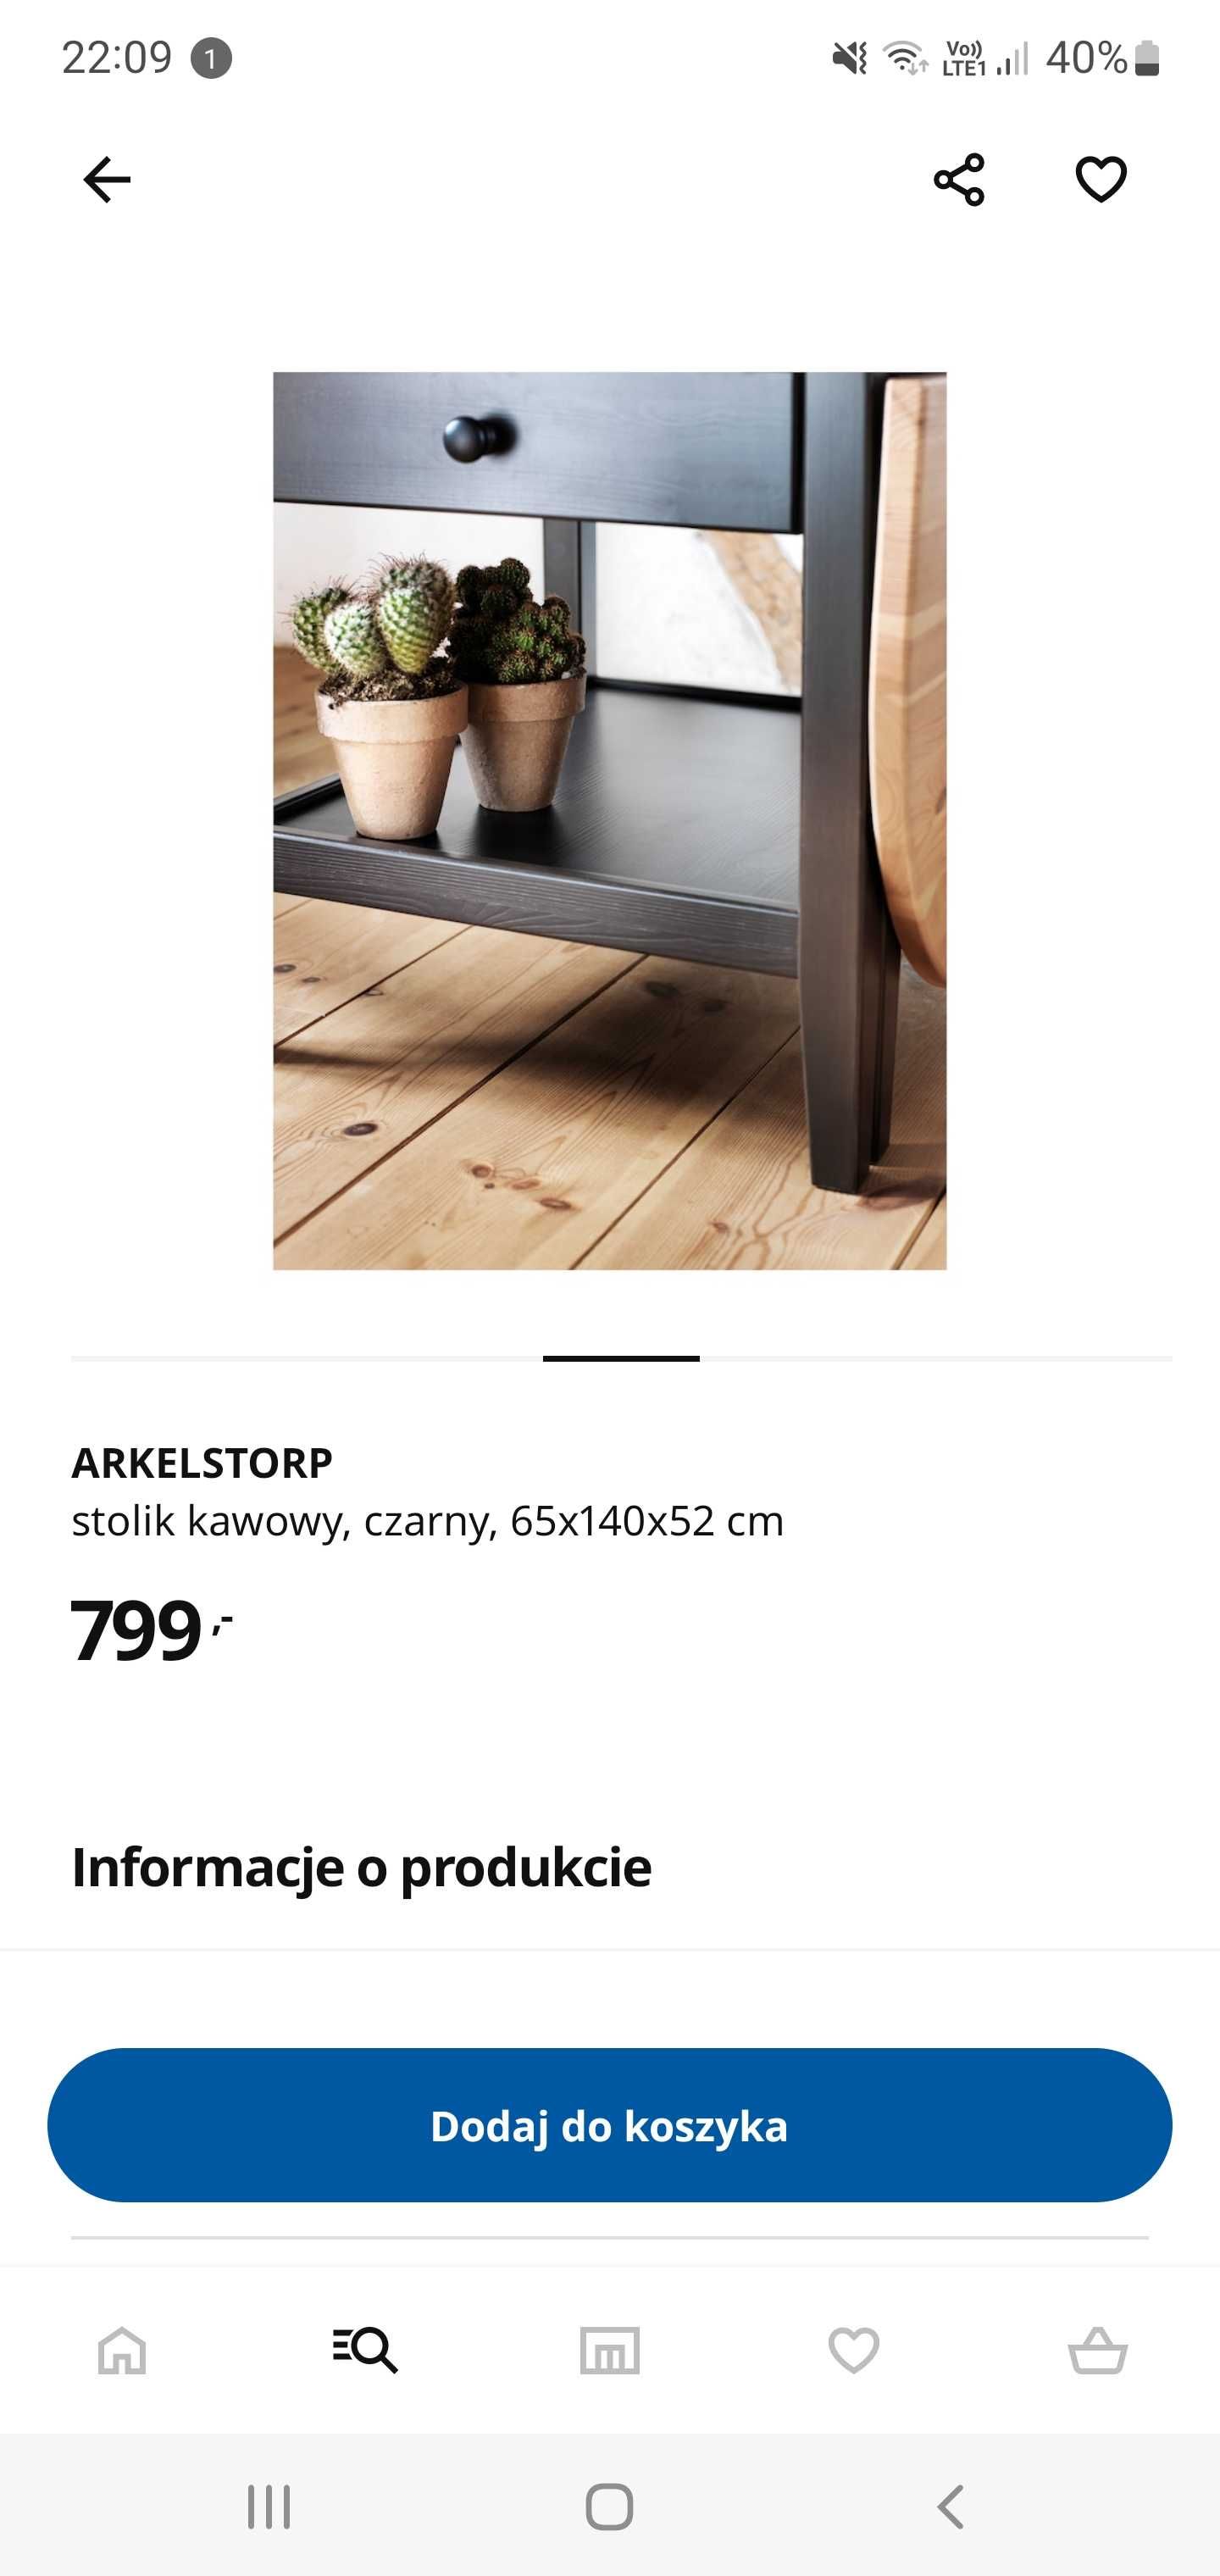 Stolik IKEA Arkelstrop